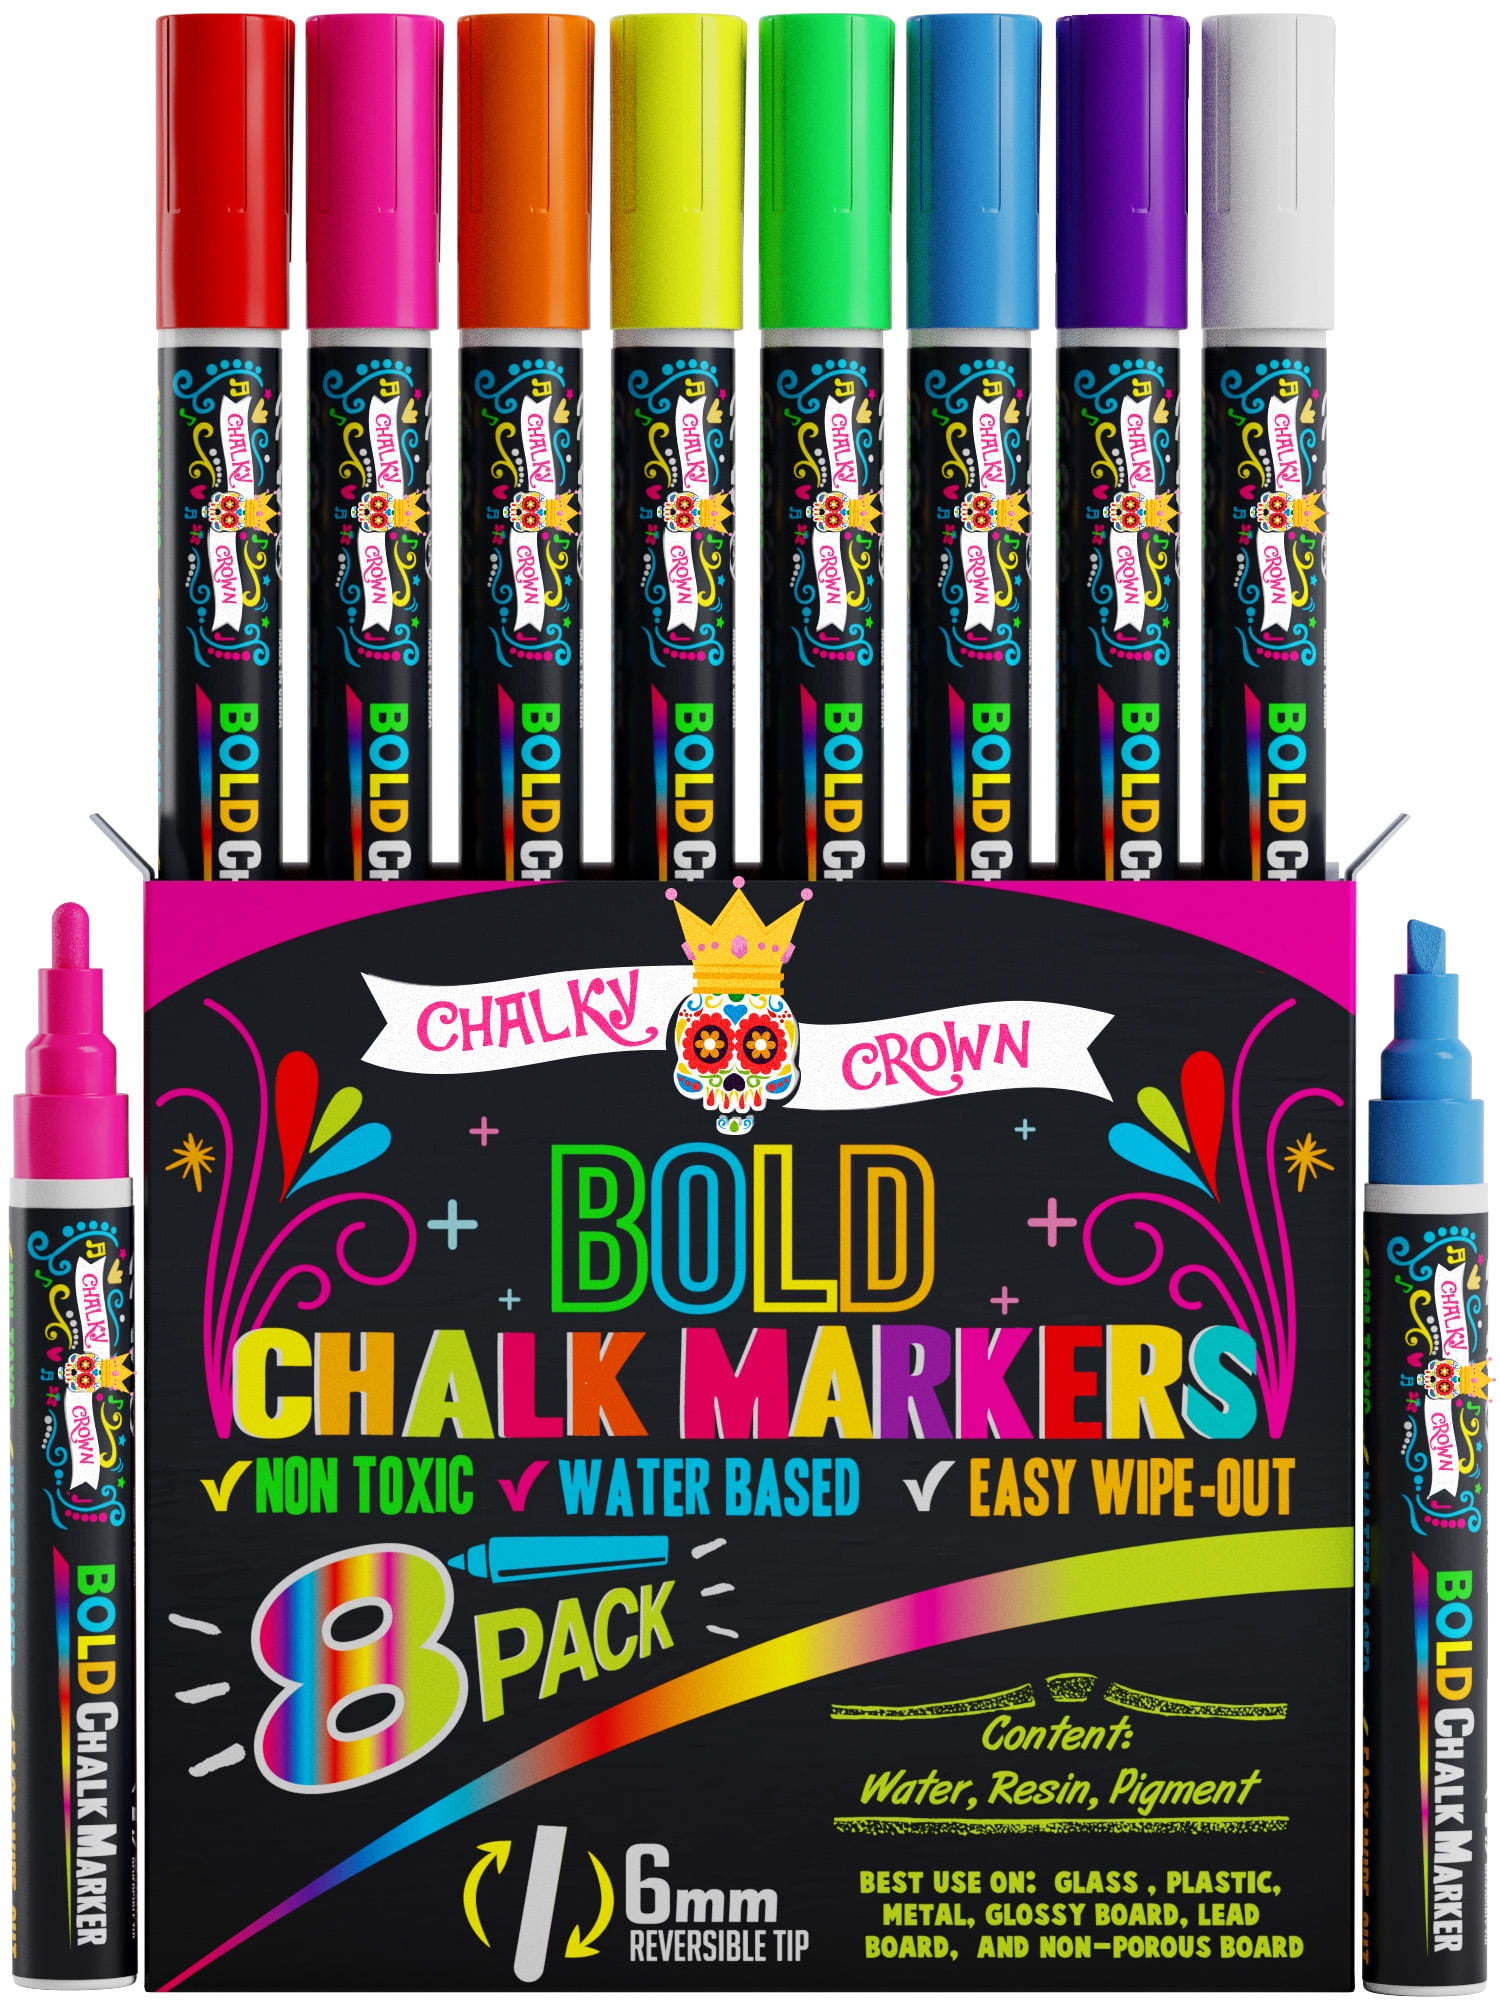 Top Chalk - Liquid Chalk Markers - 6 Pack